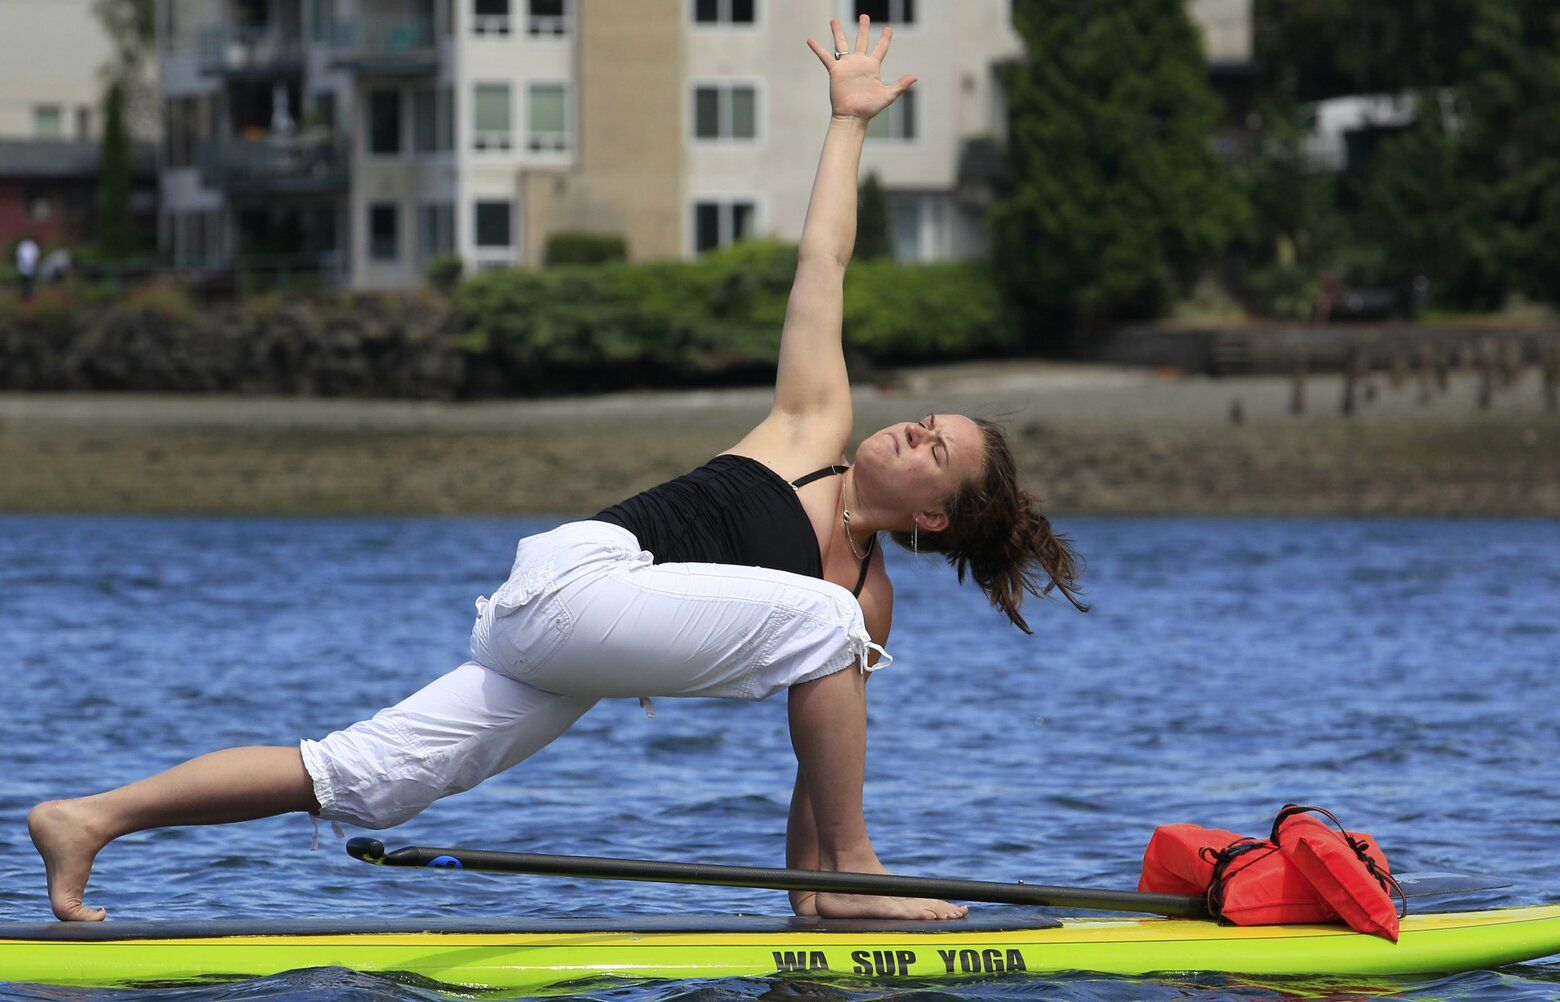 Glide O2 Lotus Inflatable Yoga Paddle Board